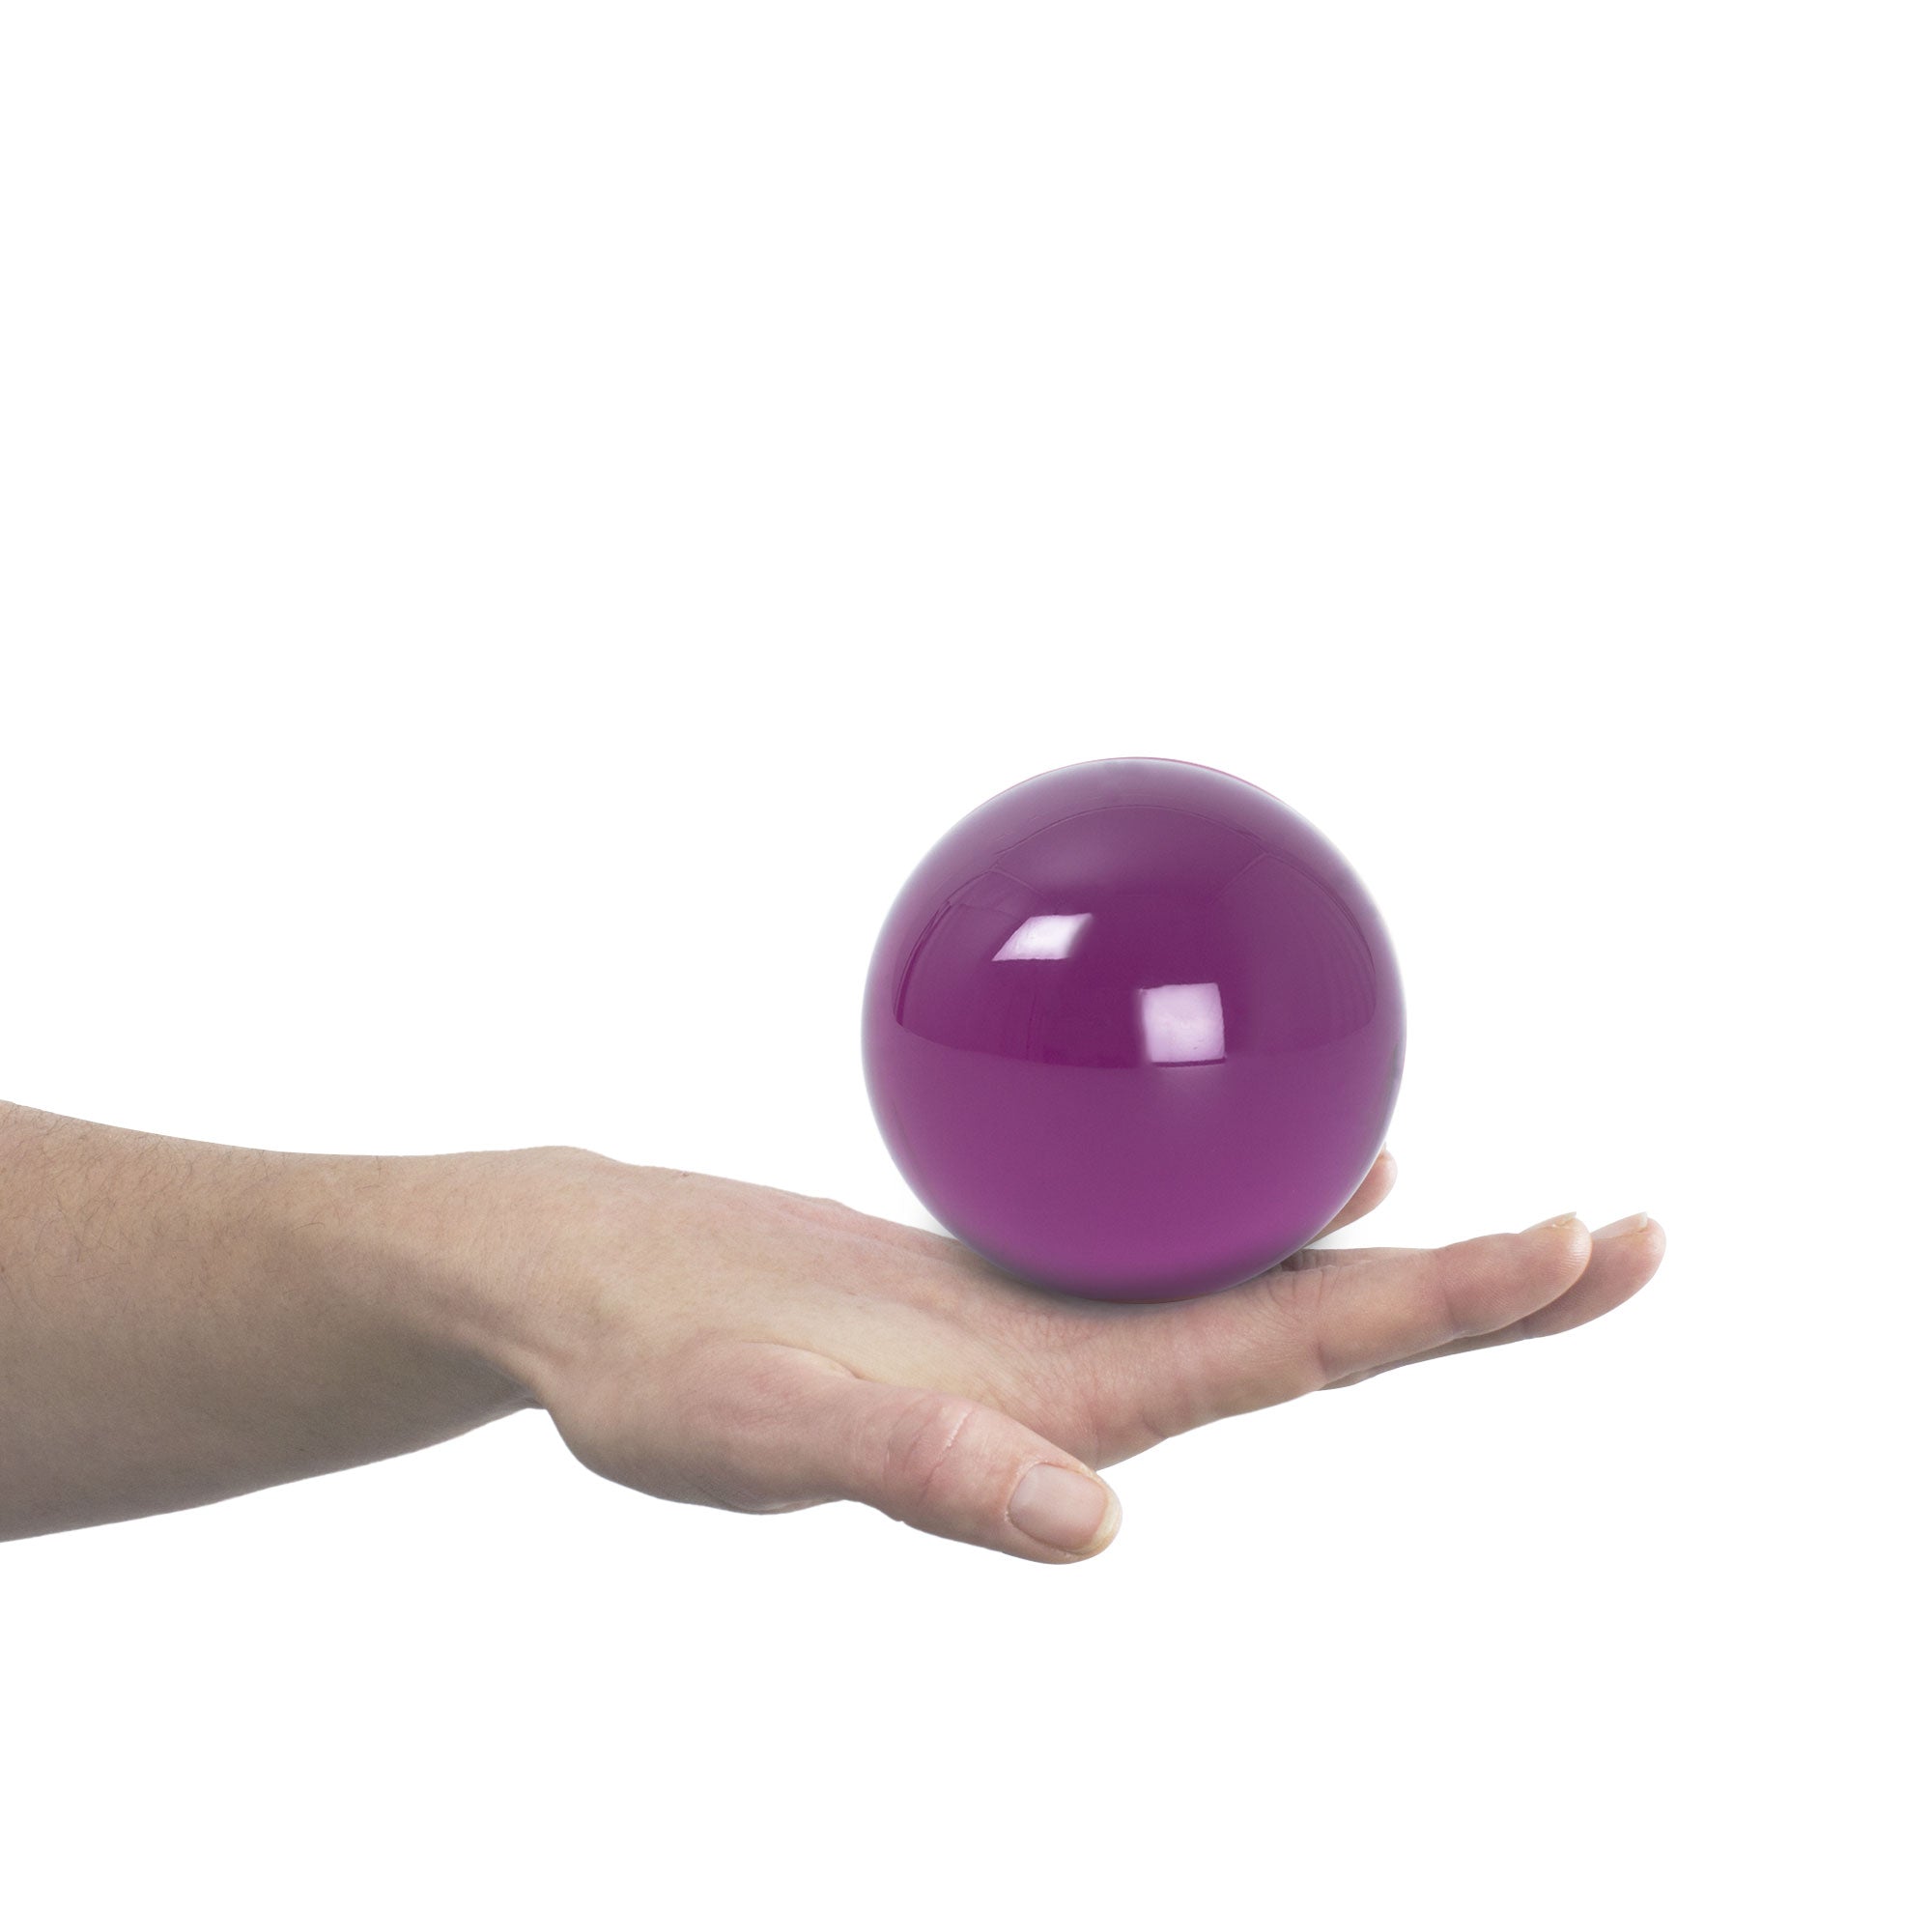 90mm purple contact ball balanced on hand